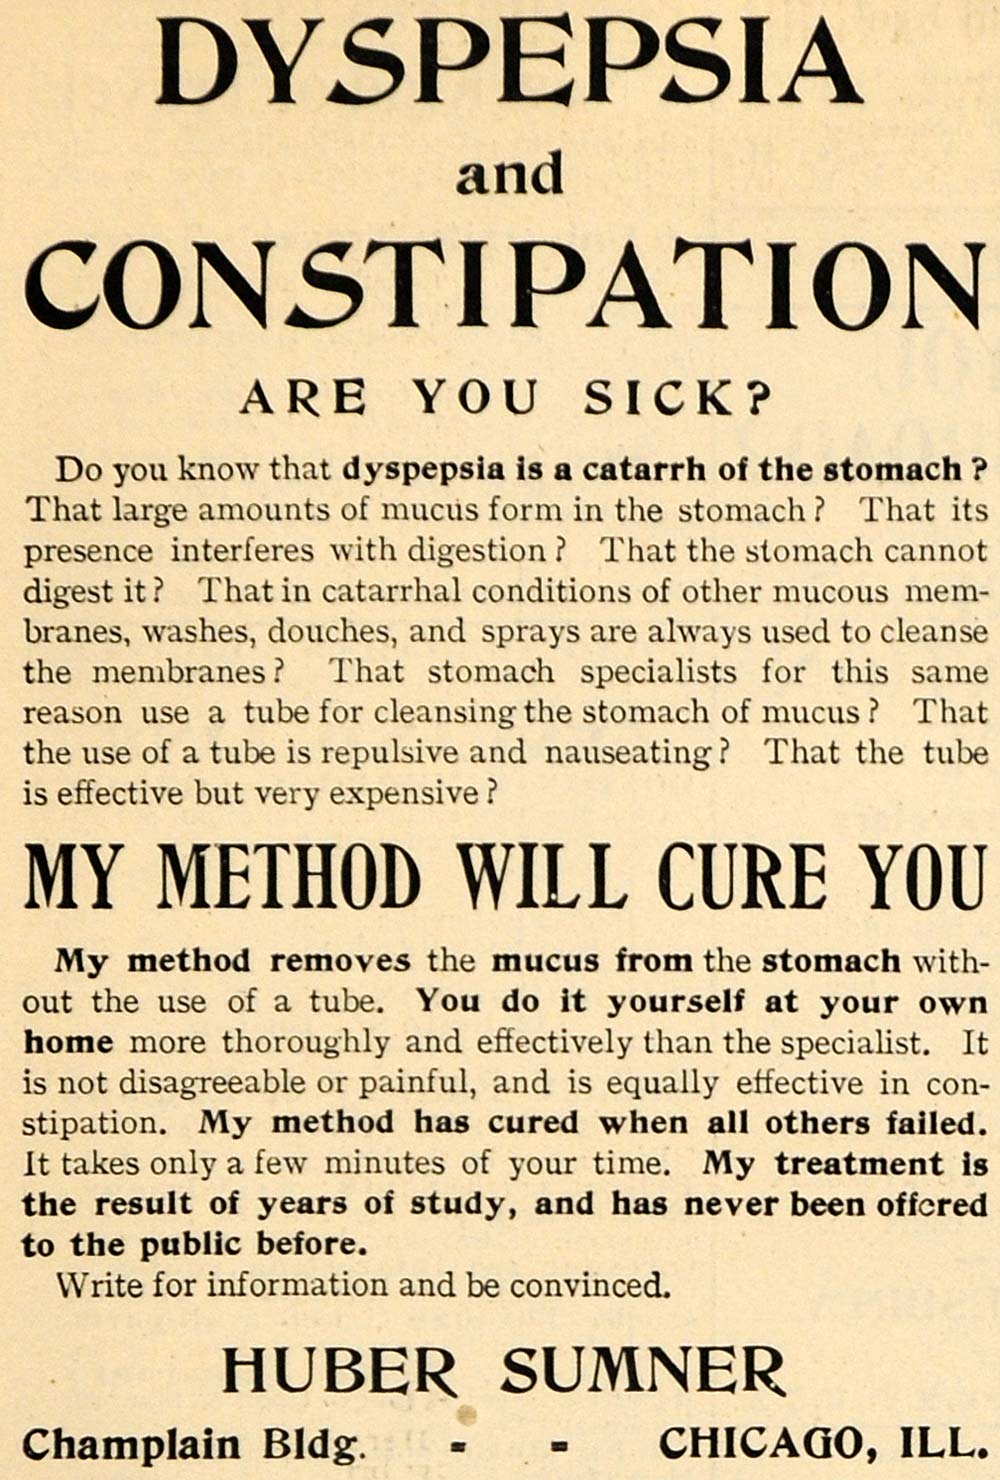 1902 Ad Dyspepsia & Constipation Treatment Huber Sumner - ORIGINAL TOM1